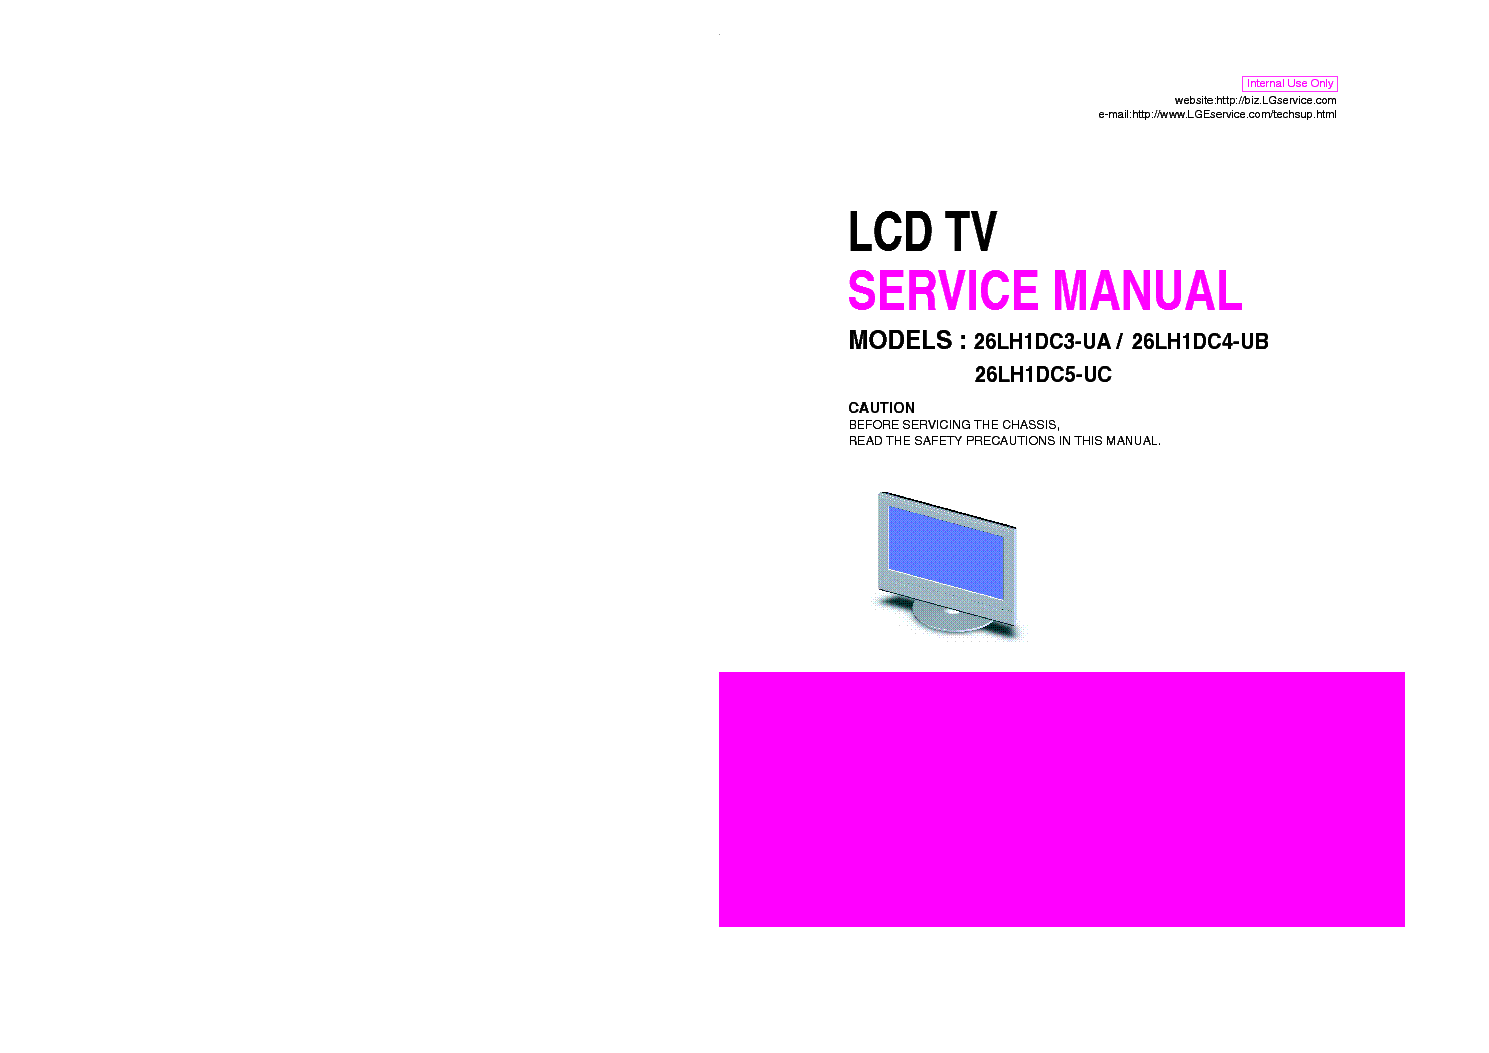 LG 26LH1DC5 service manual (1st page)